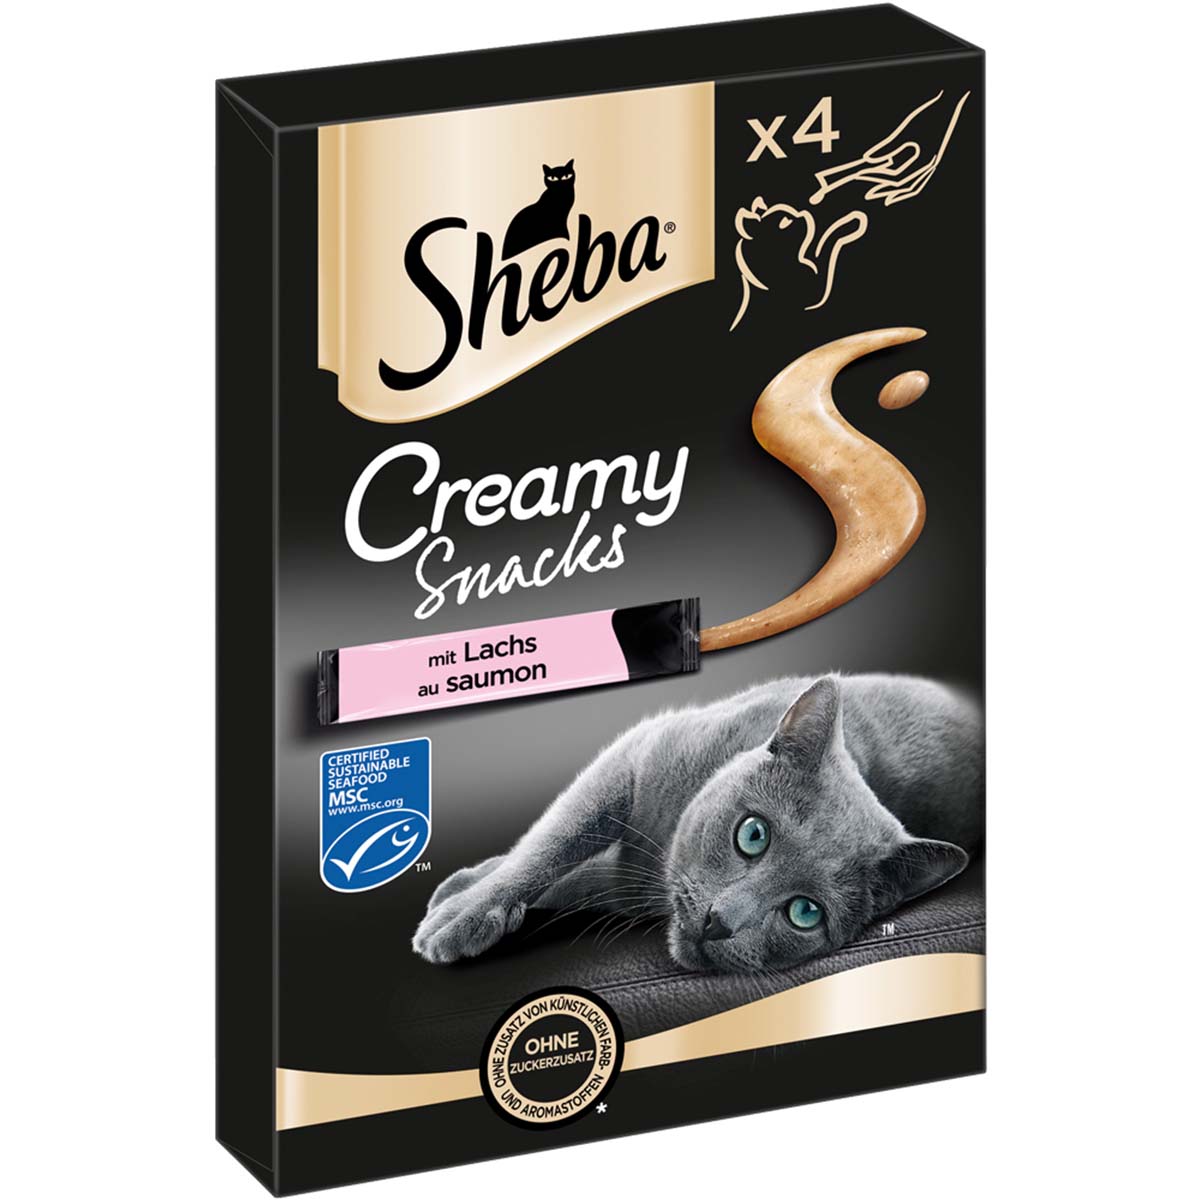 SHEBA® Creamy Snacks mit Lachs 4x12g von Sheba